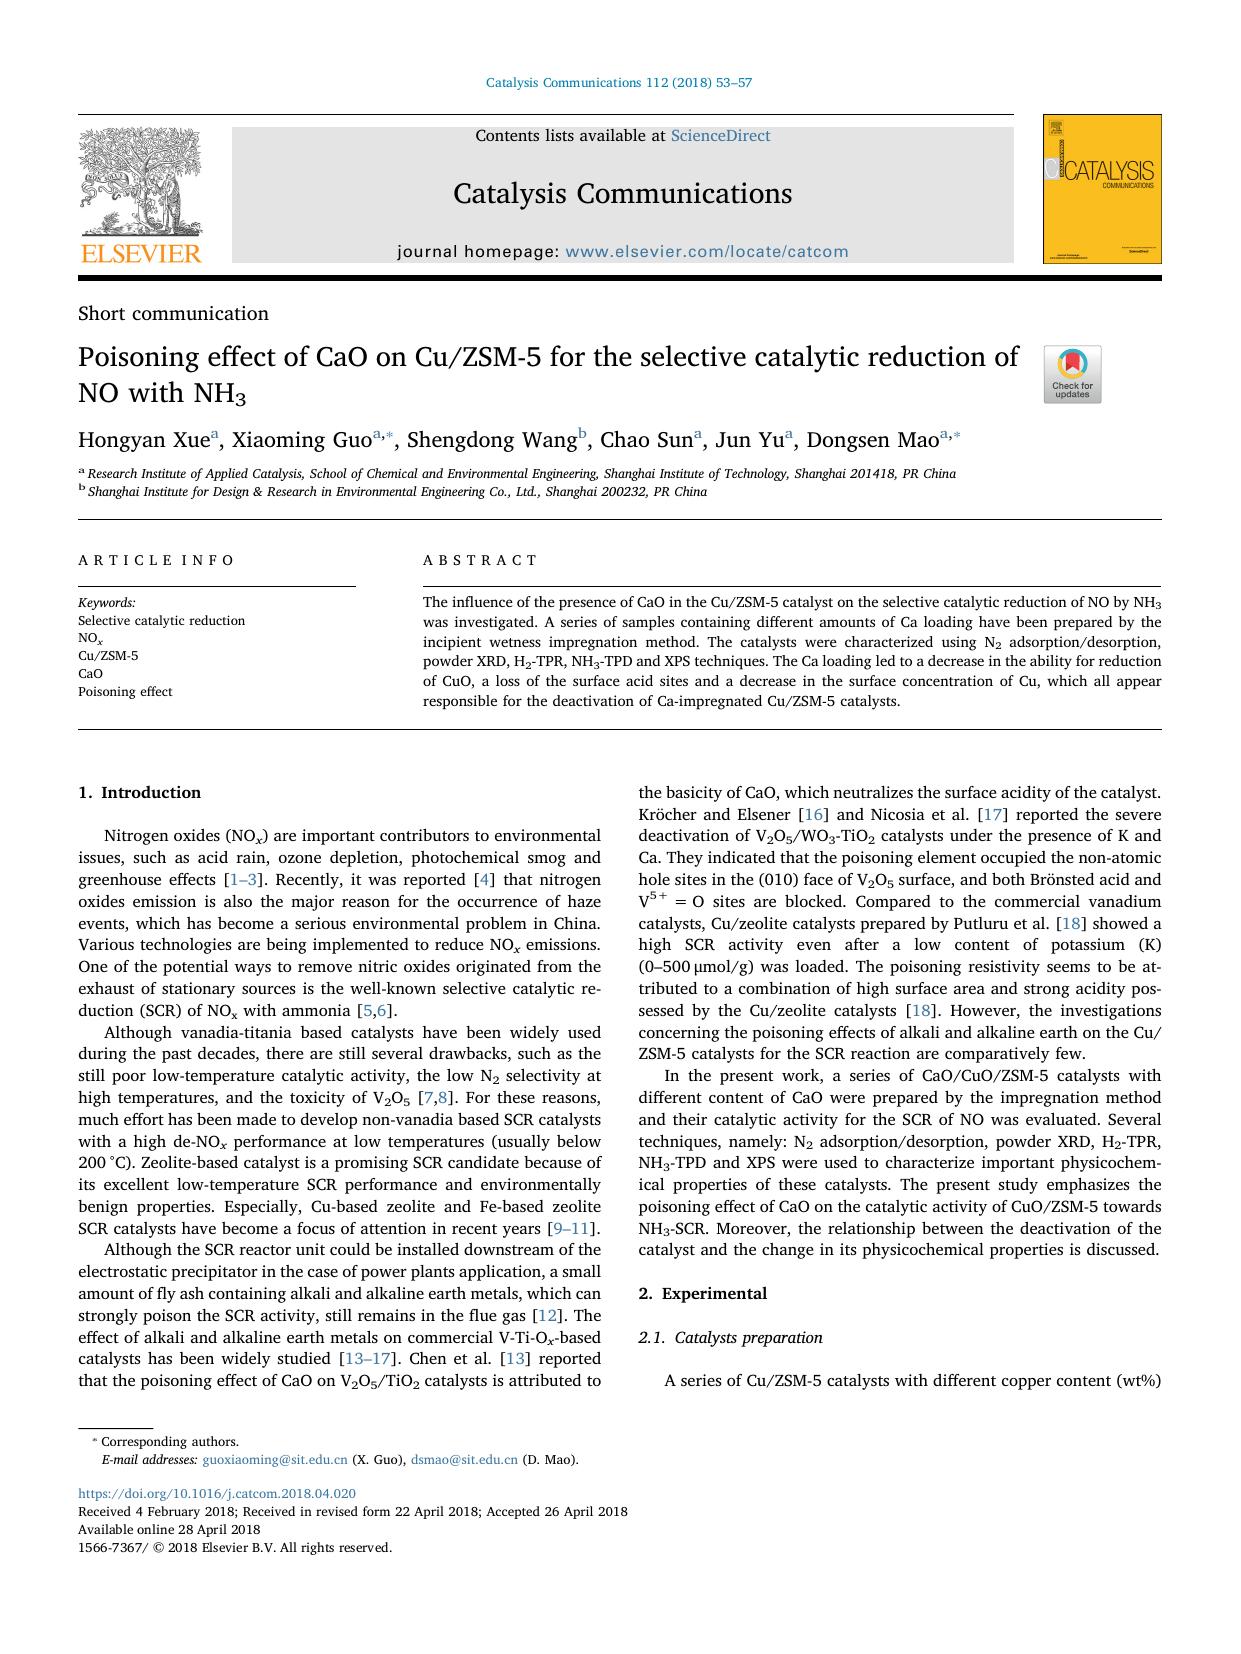 Poisoning effect of CaO on CuZSM-5 for the selective catalytic reduction of NO with NH3 by Hongyan Xue & Xiaoming Guo & Shengdong Wang & Chao Sun & Jun Yu & Dongsen Mao